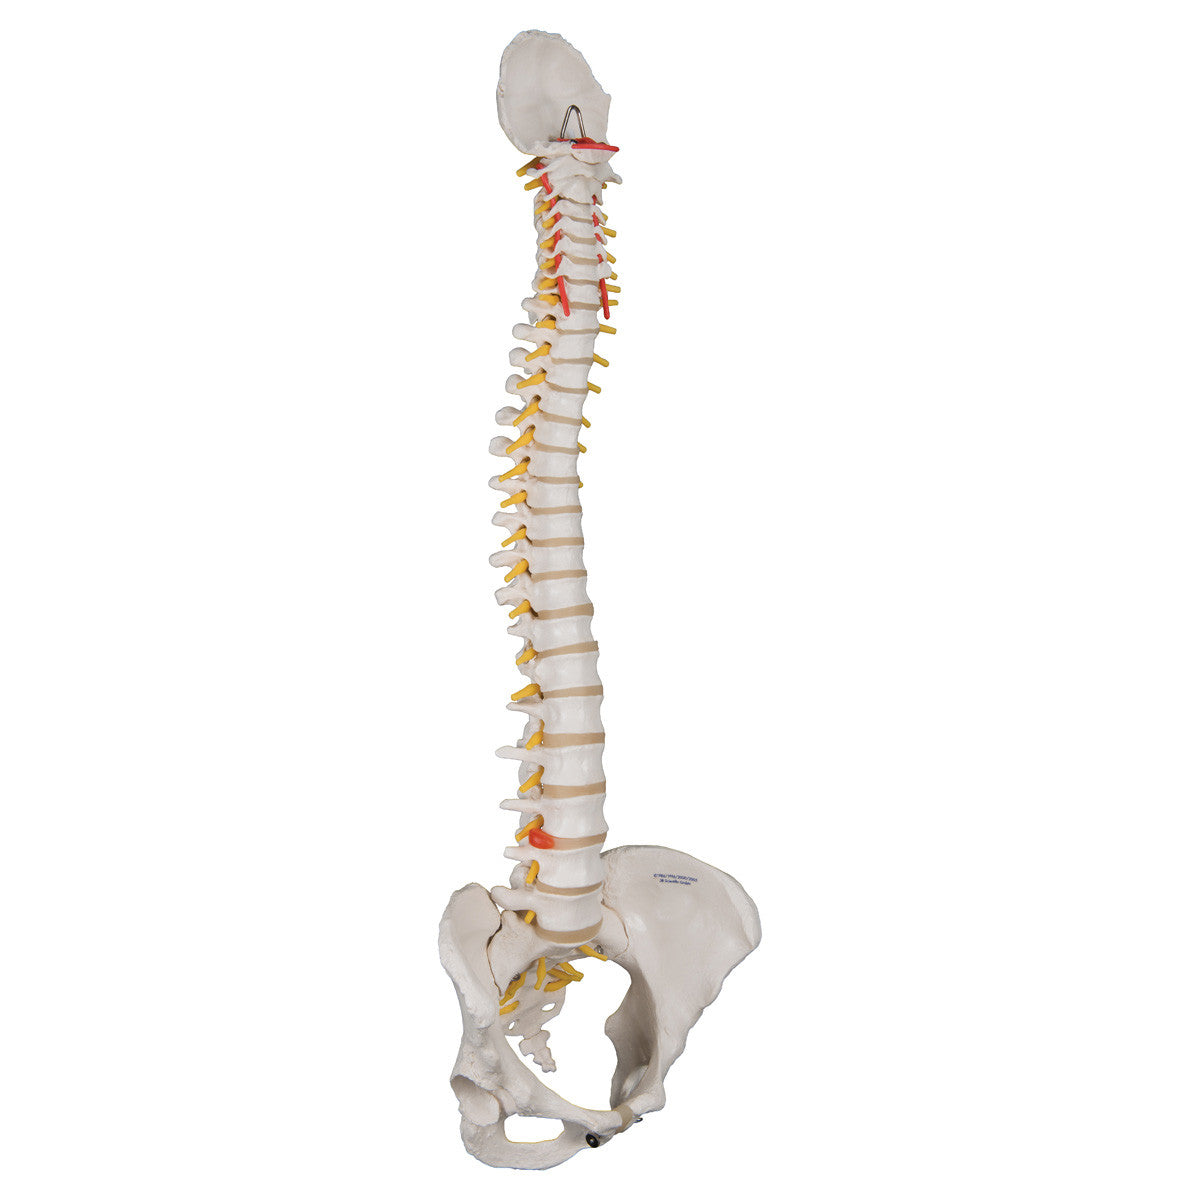 a58-4_02_1200_1200_classic-flexible-human-spine-model-with-female-pelvis-3b-smart-anatomy__35395.1589753024.1280.1280.jpg